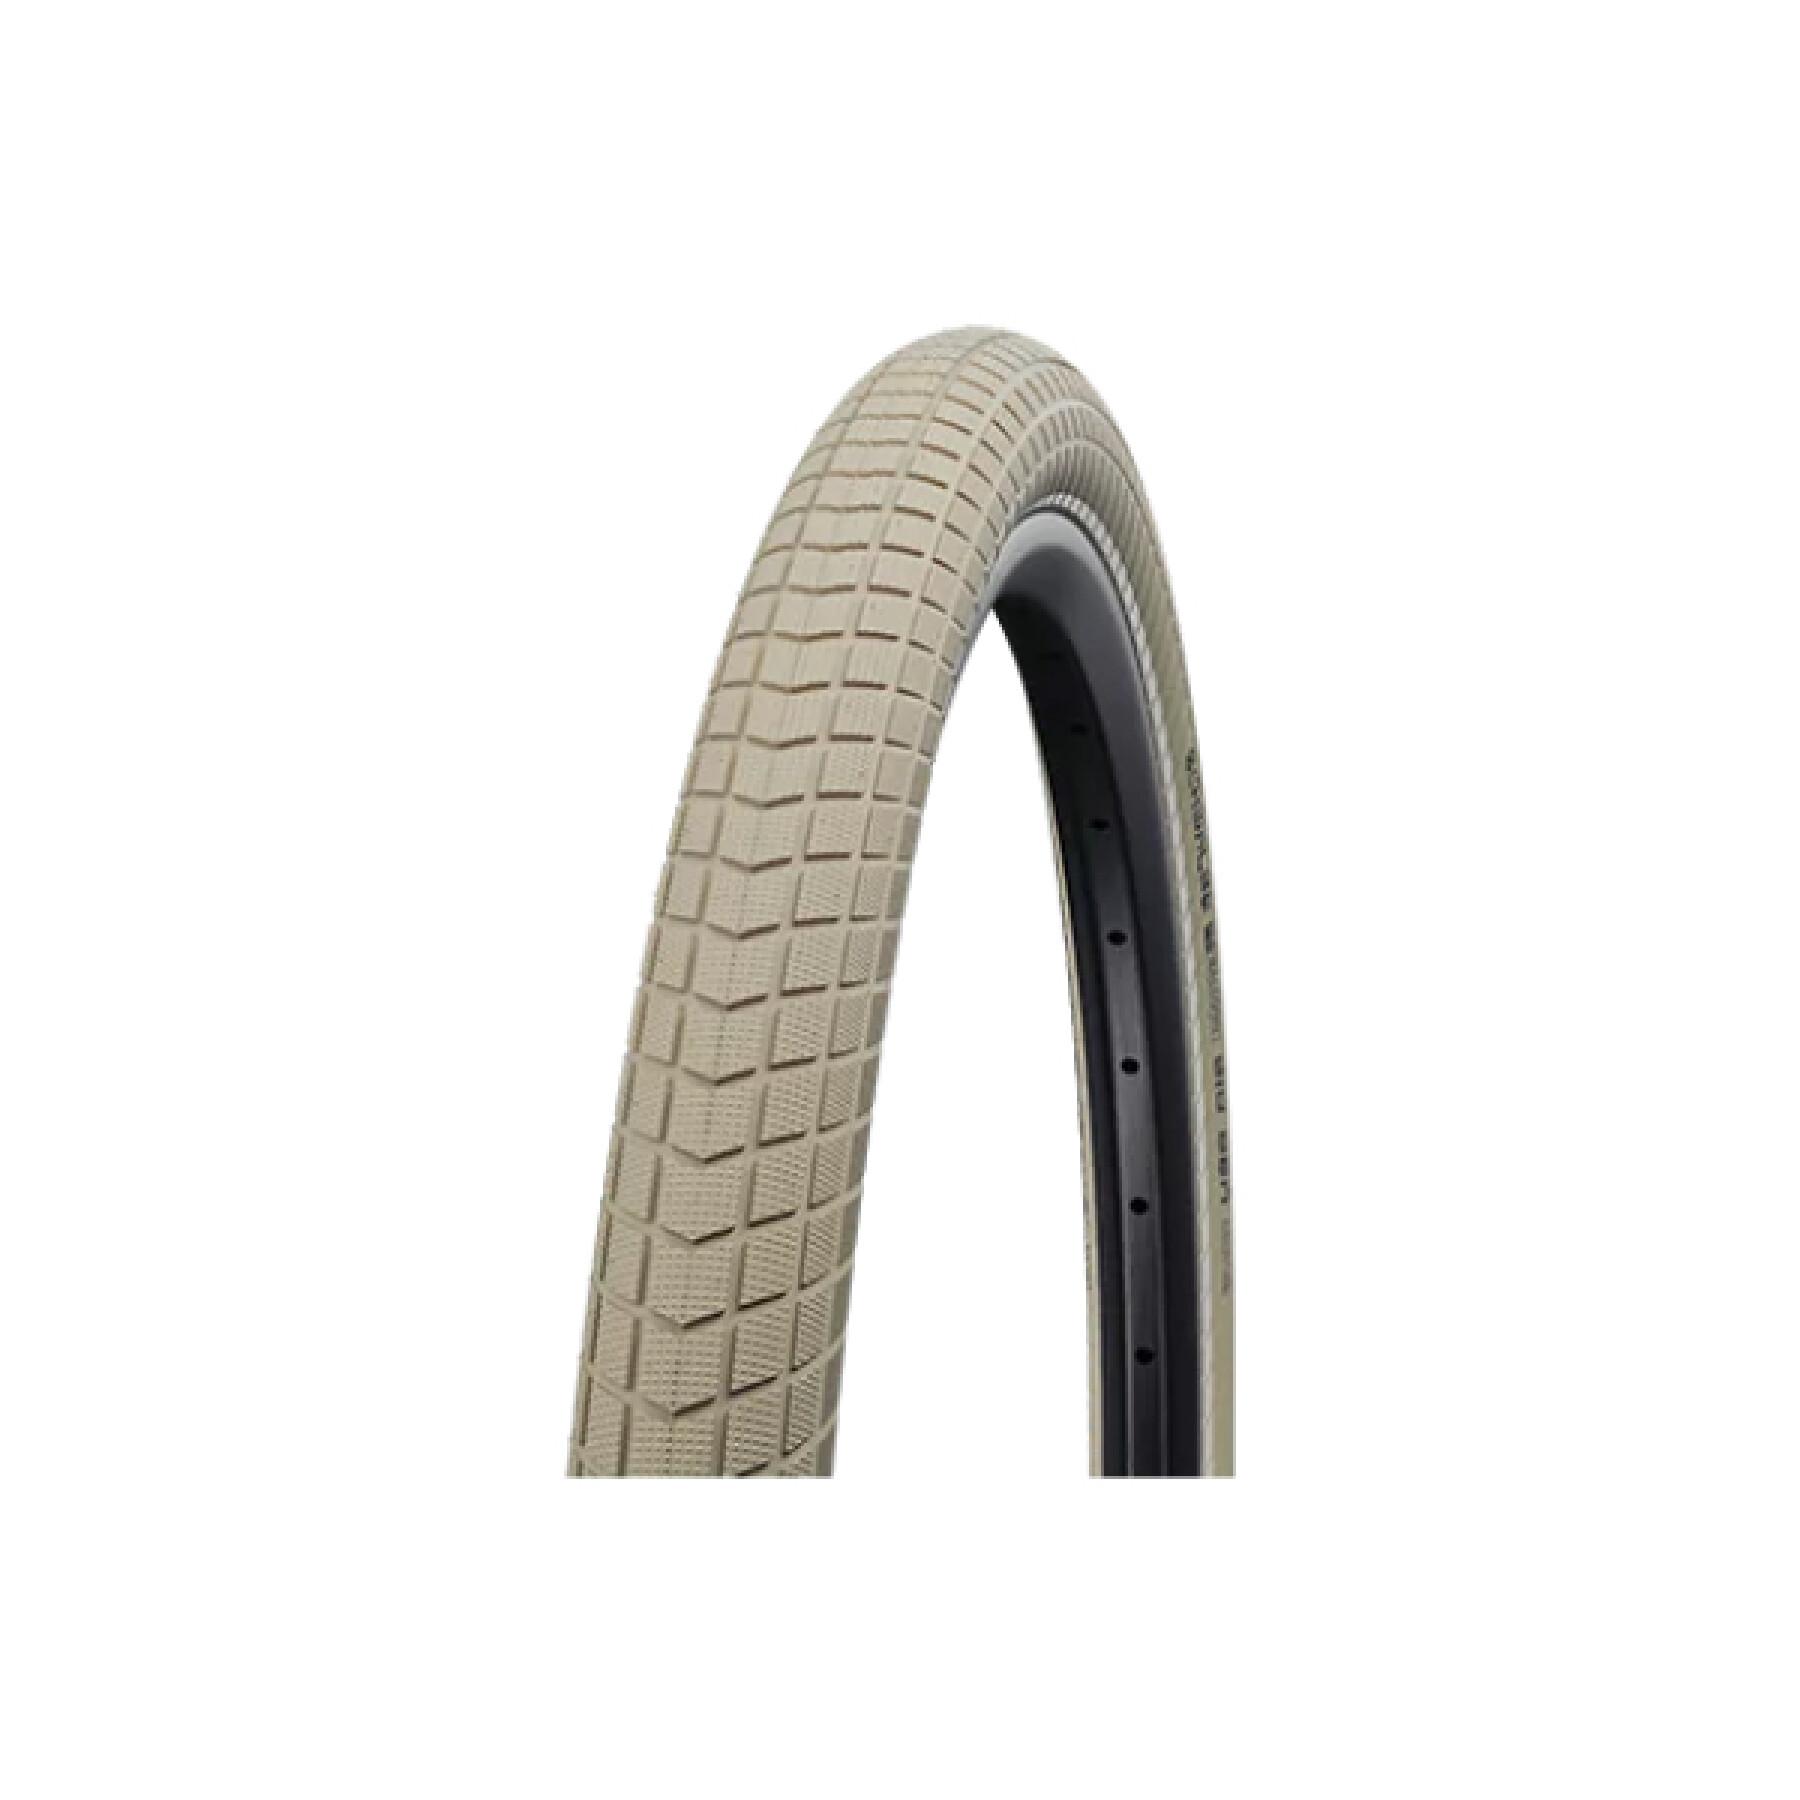 Rigid tire Schwalbe Little Big Ben 28x1,50/700x38c K-Guard Active Hs439 Twinskin